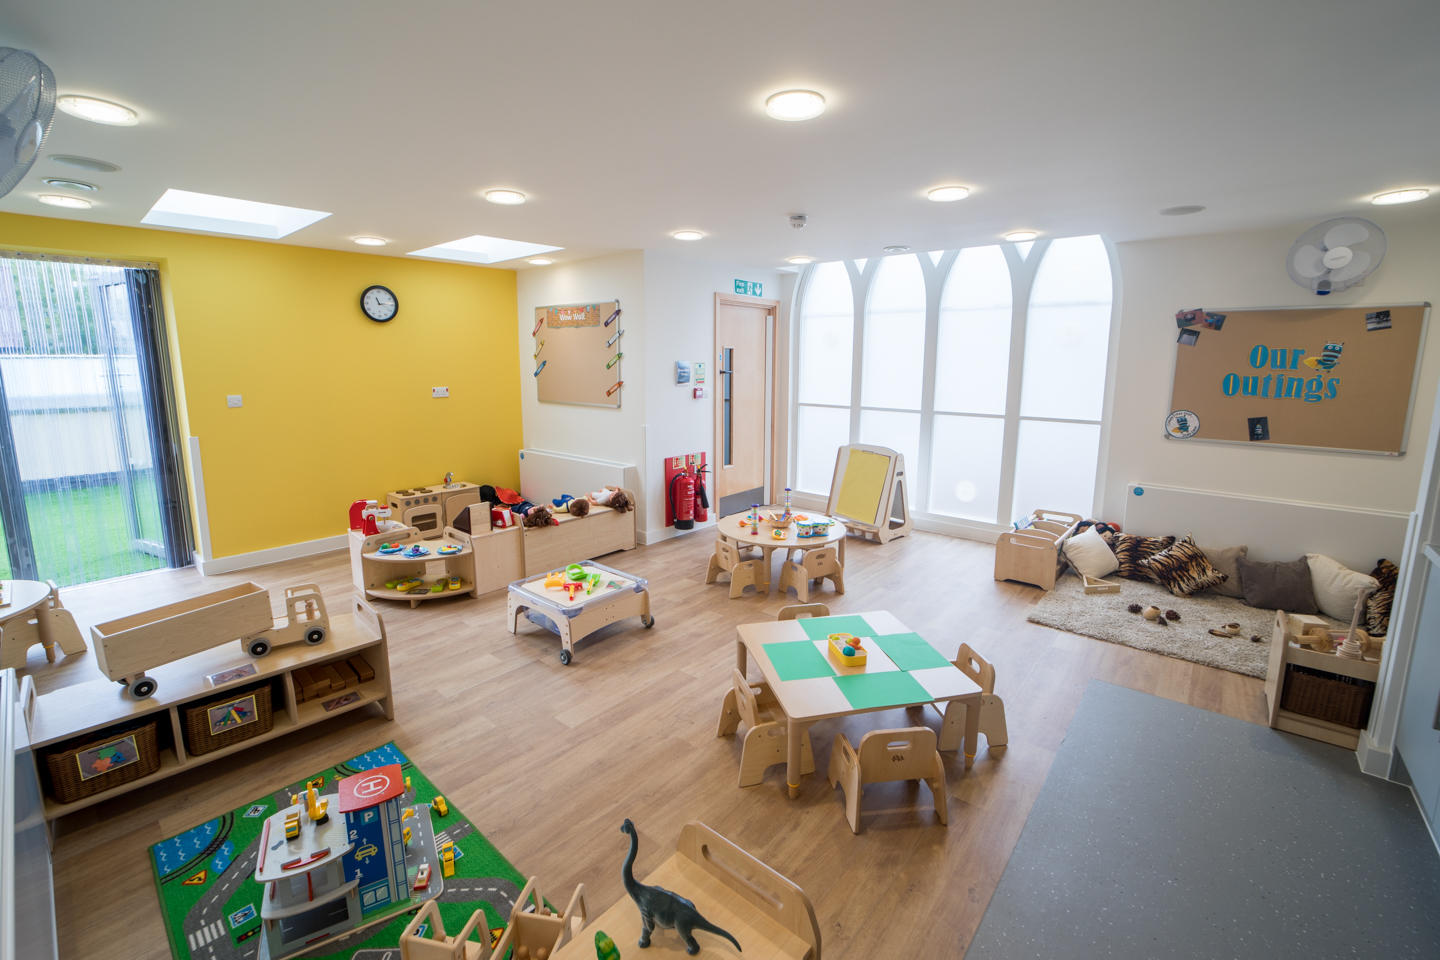 Images Bright Horizons Surbiton Ewell Road Day Nursery and Preschool